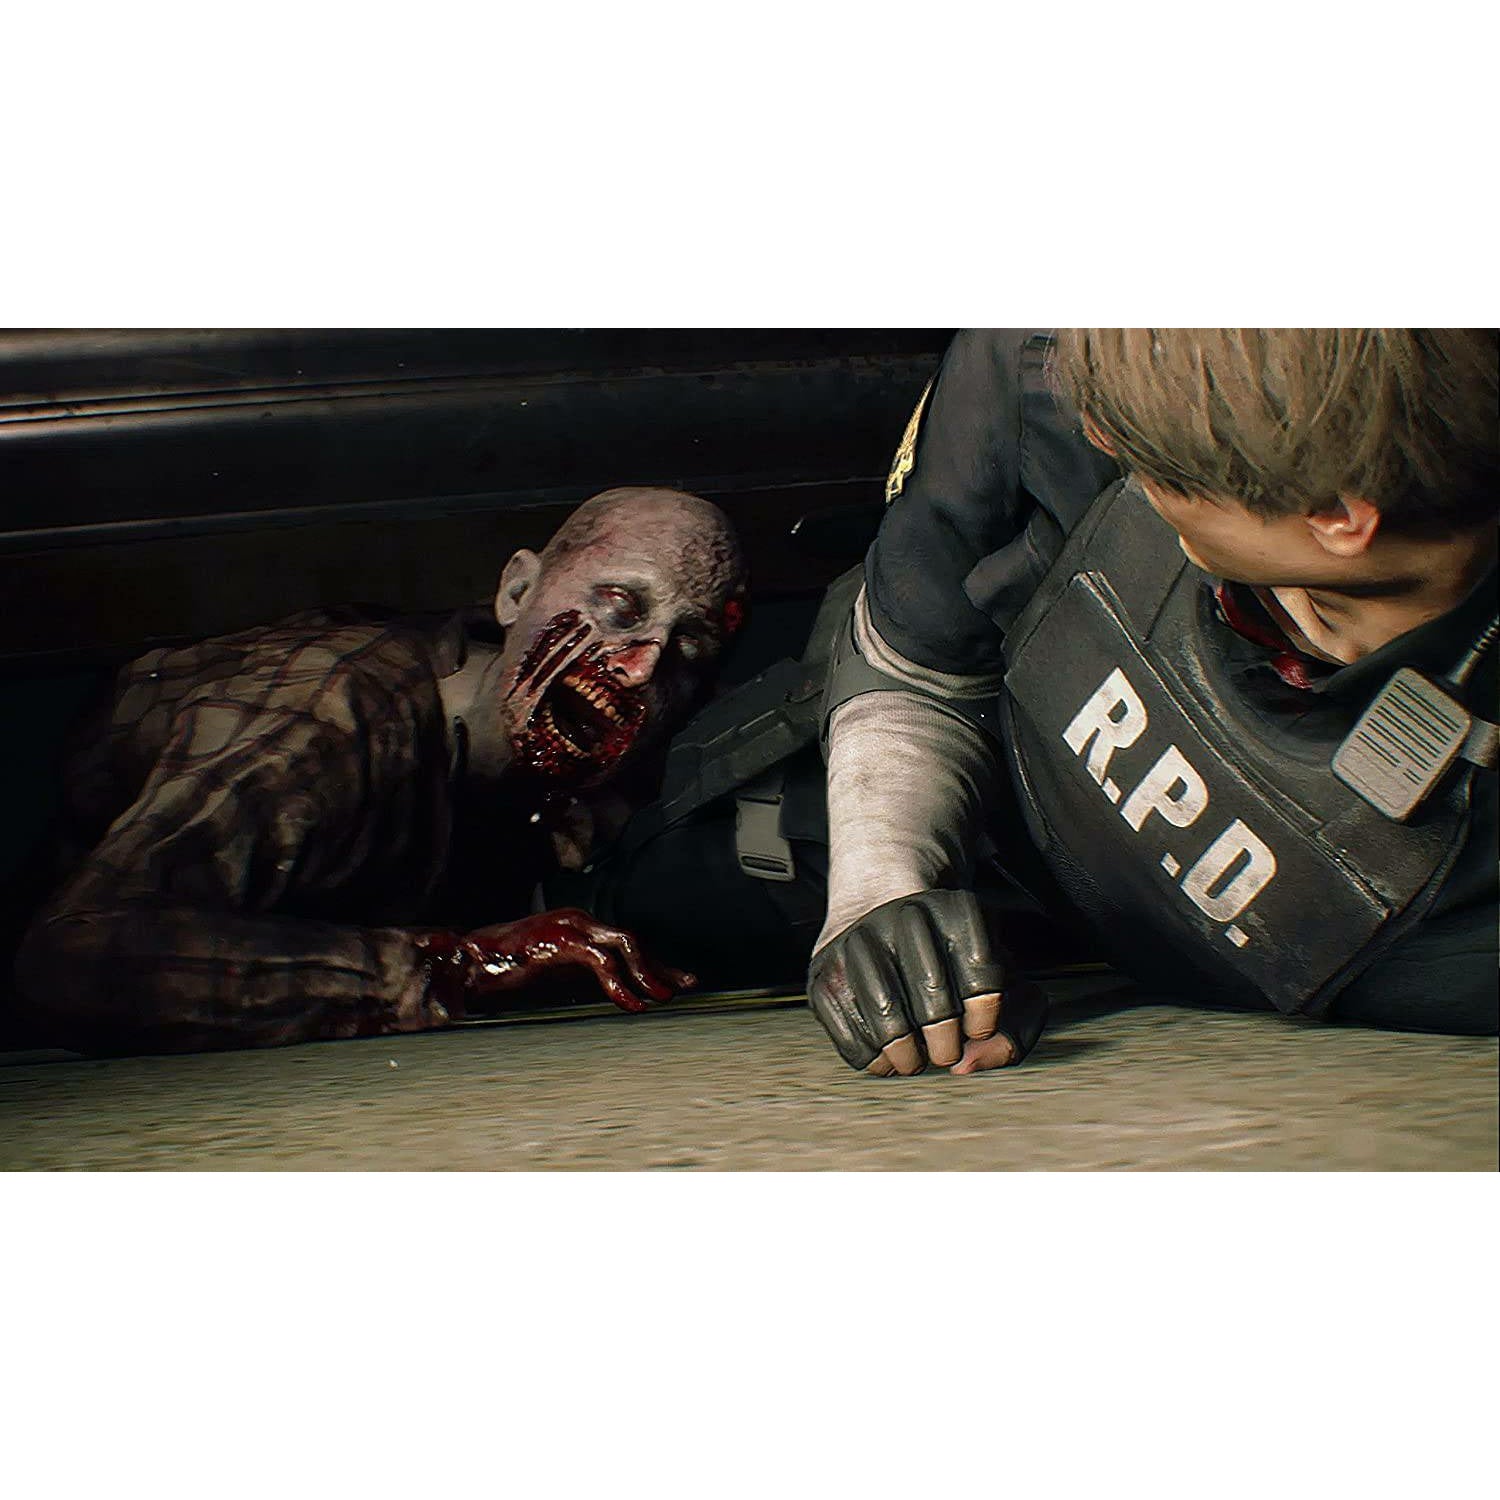 Resident Evil 2 - PlayStation 4 - Gshop Pty